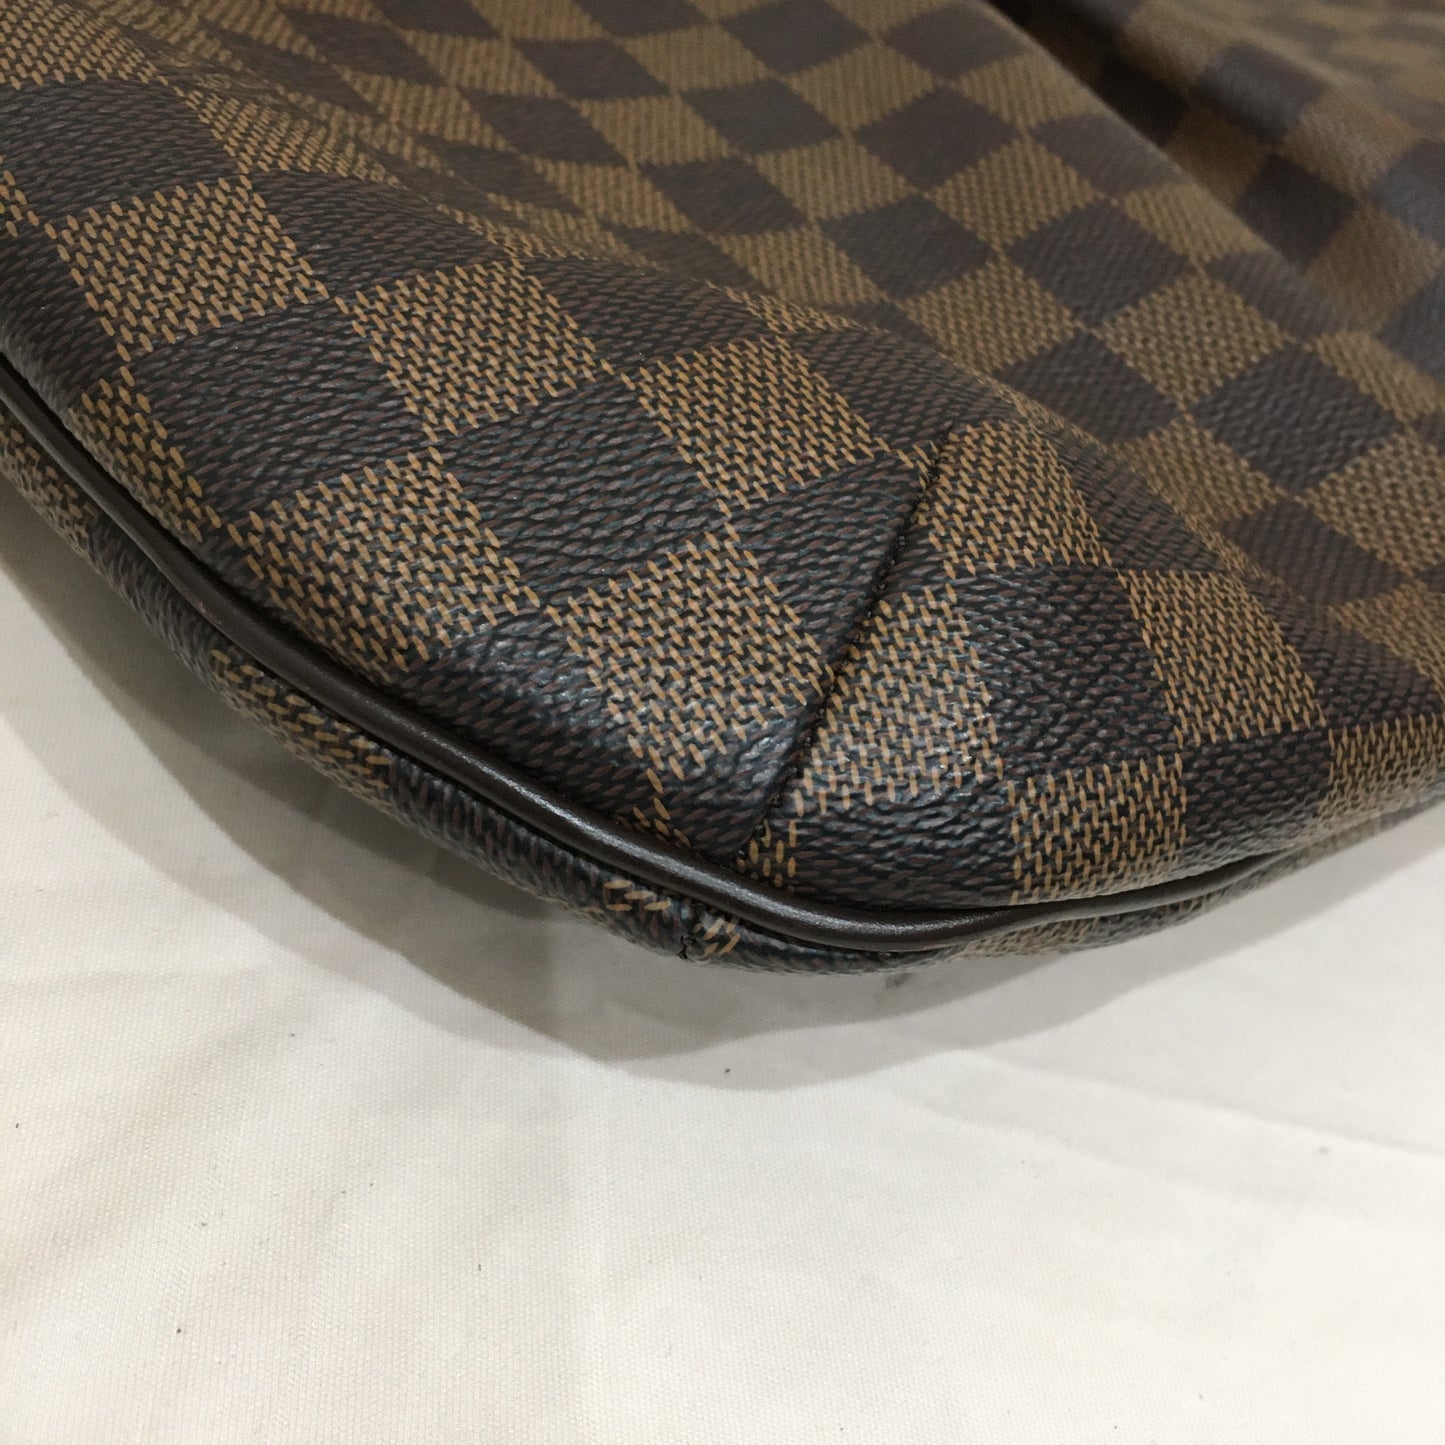 Preowned Louis Vuitton Monogram Palermo GM With Strap Shoulder Bag Sku# 65862